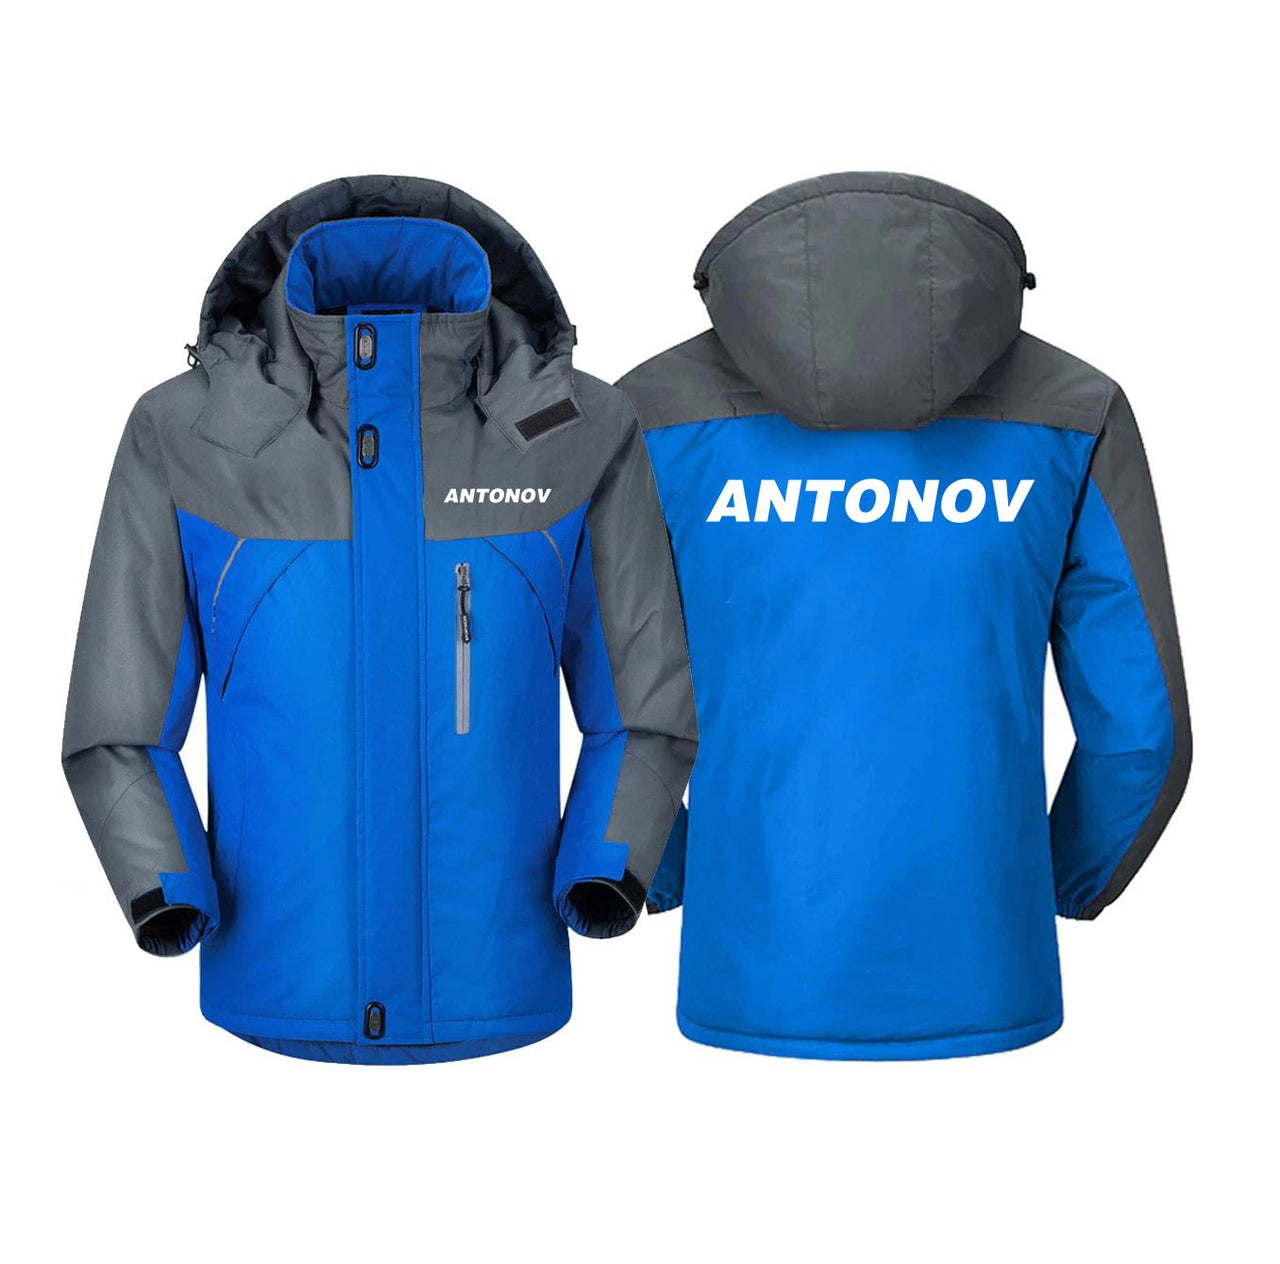 Antonov & Text Designed Thick Winter Jackets